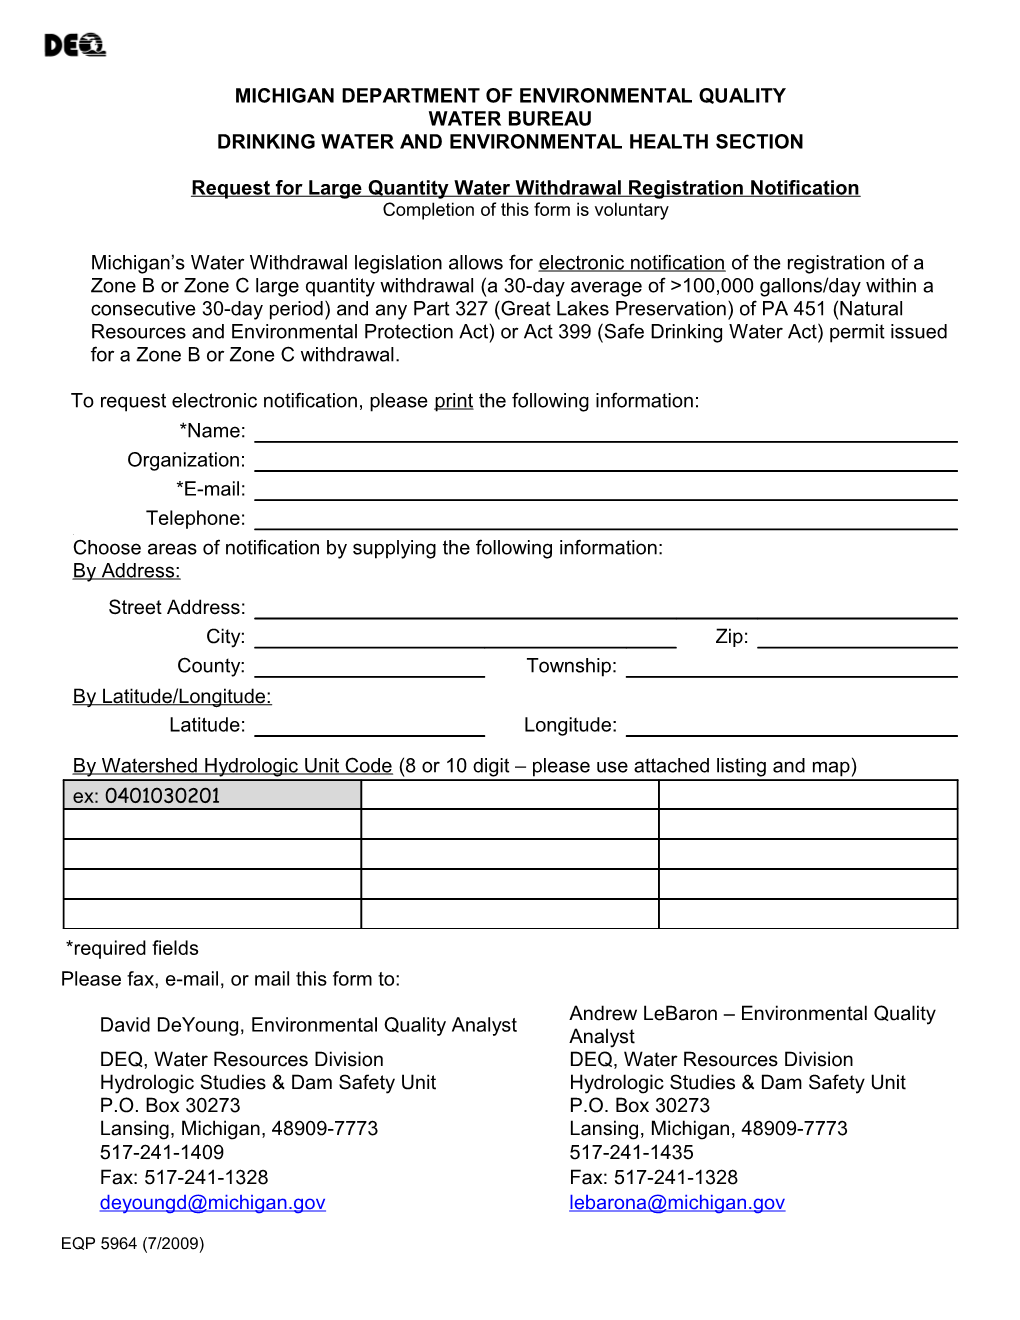 Request for LQW Registration Notification